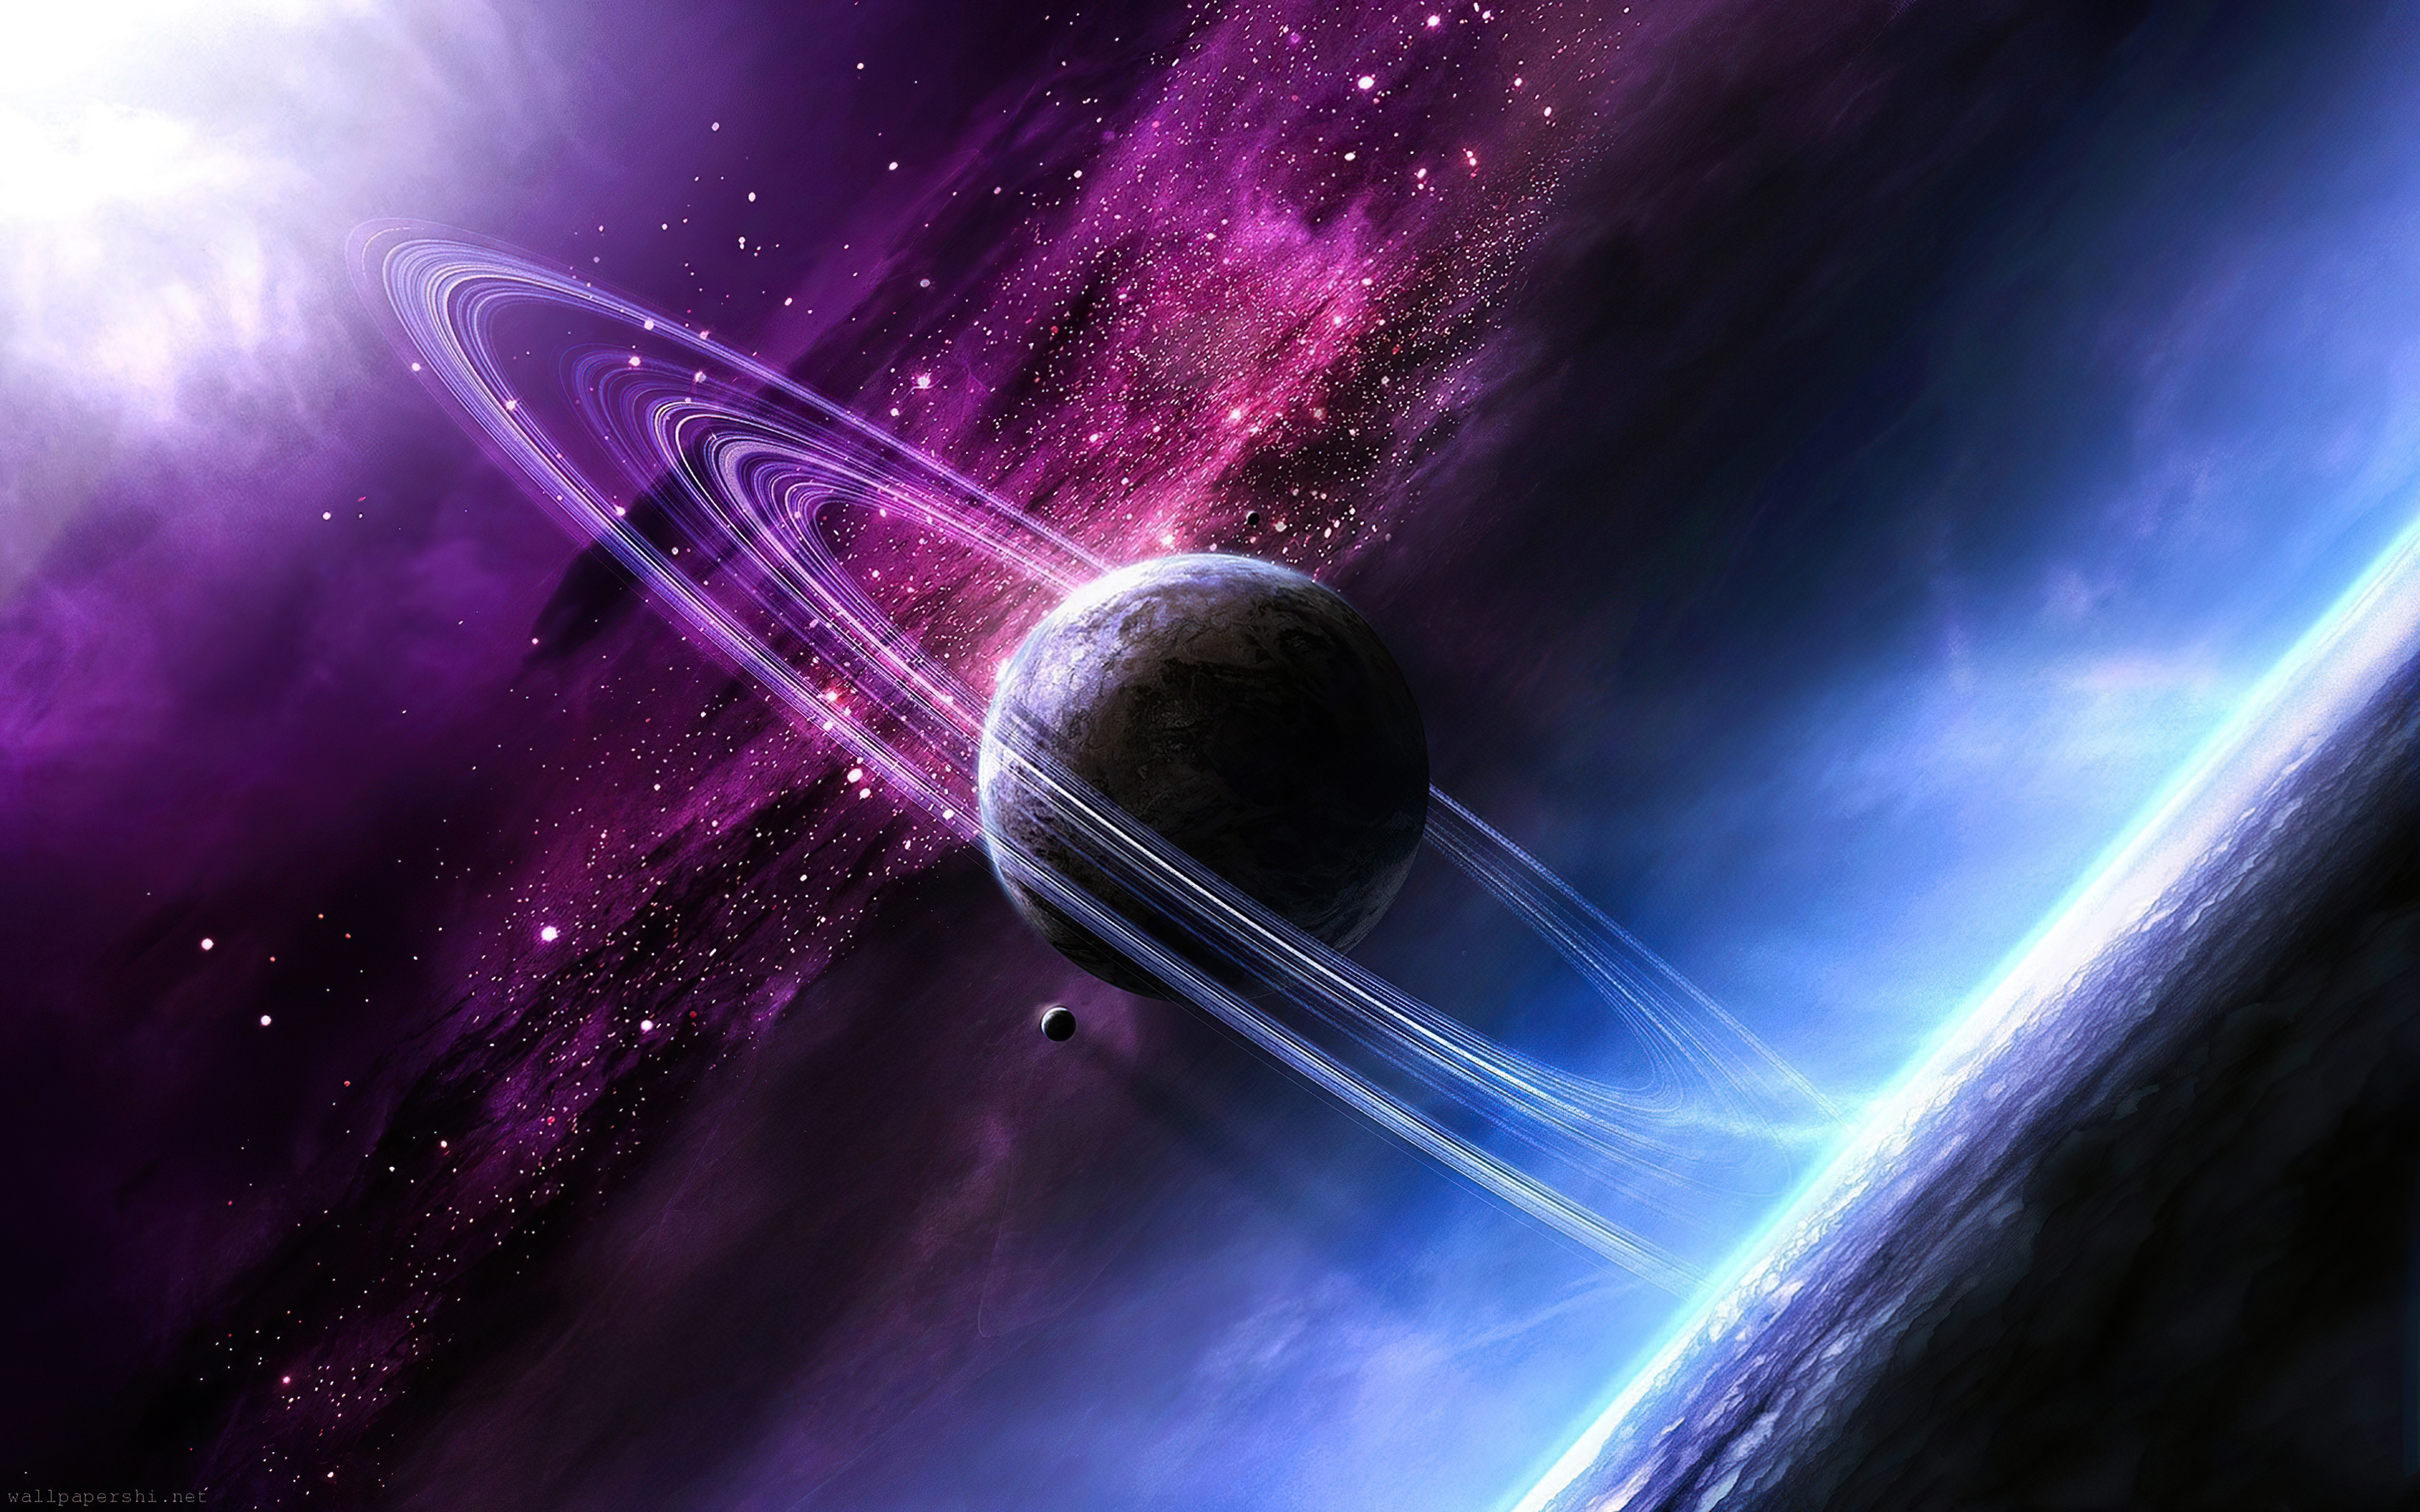 Saturn in fantasy space